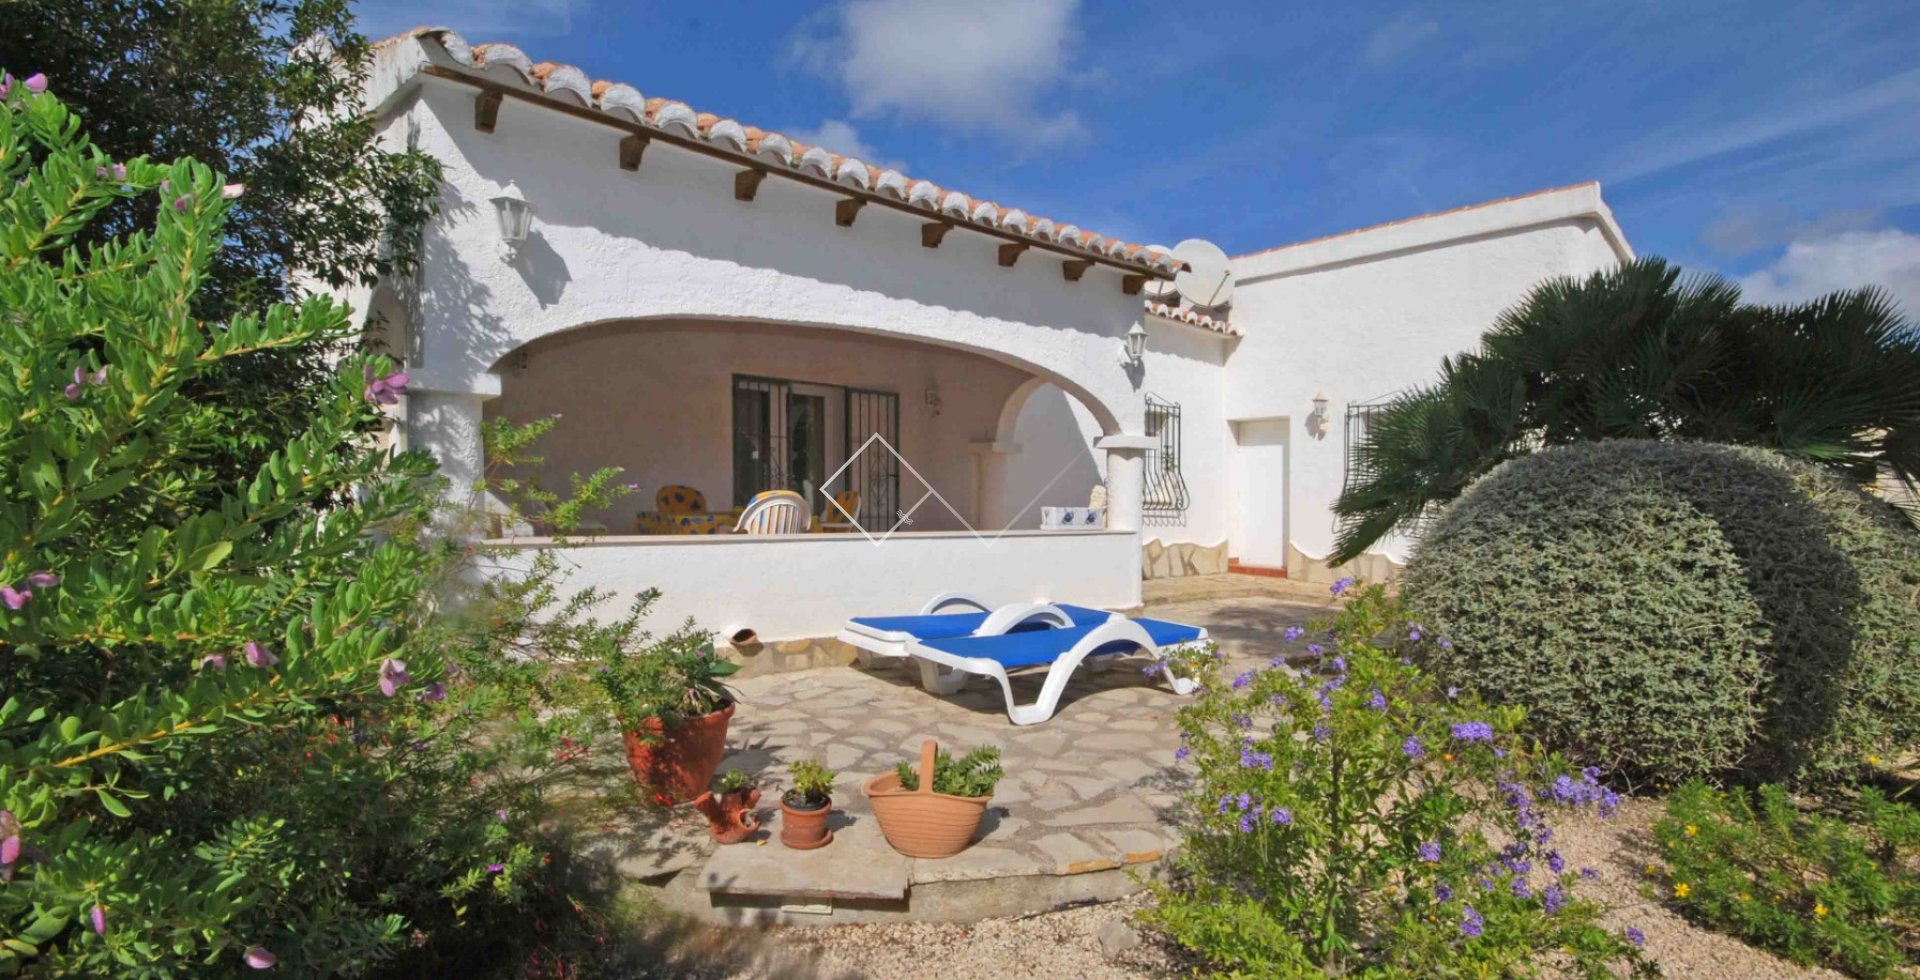 Entrance - Nice villa for sale on Cumbre del Sol, Benitachell